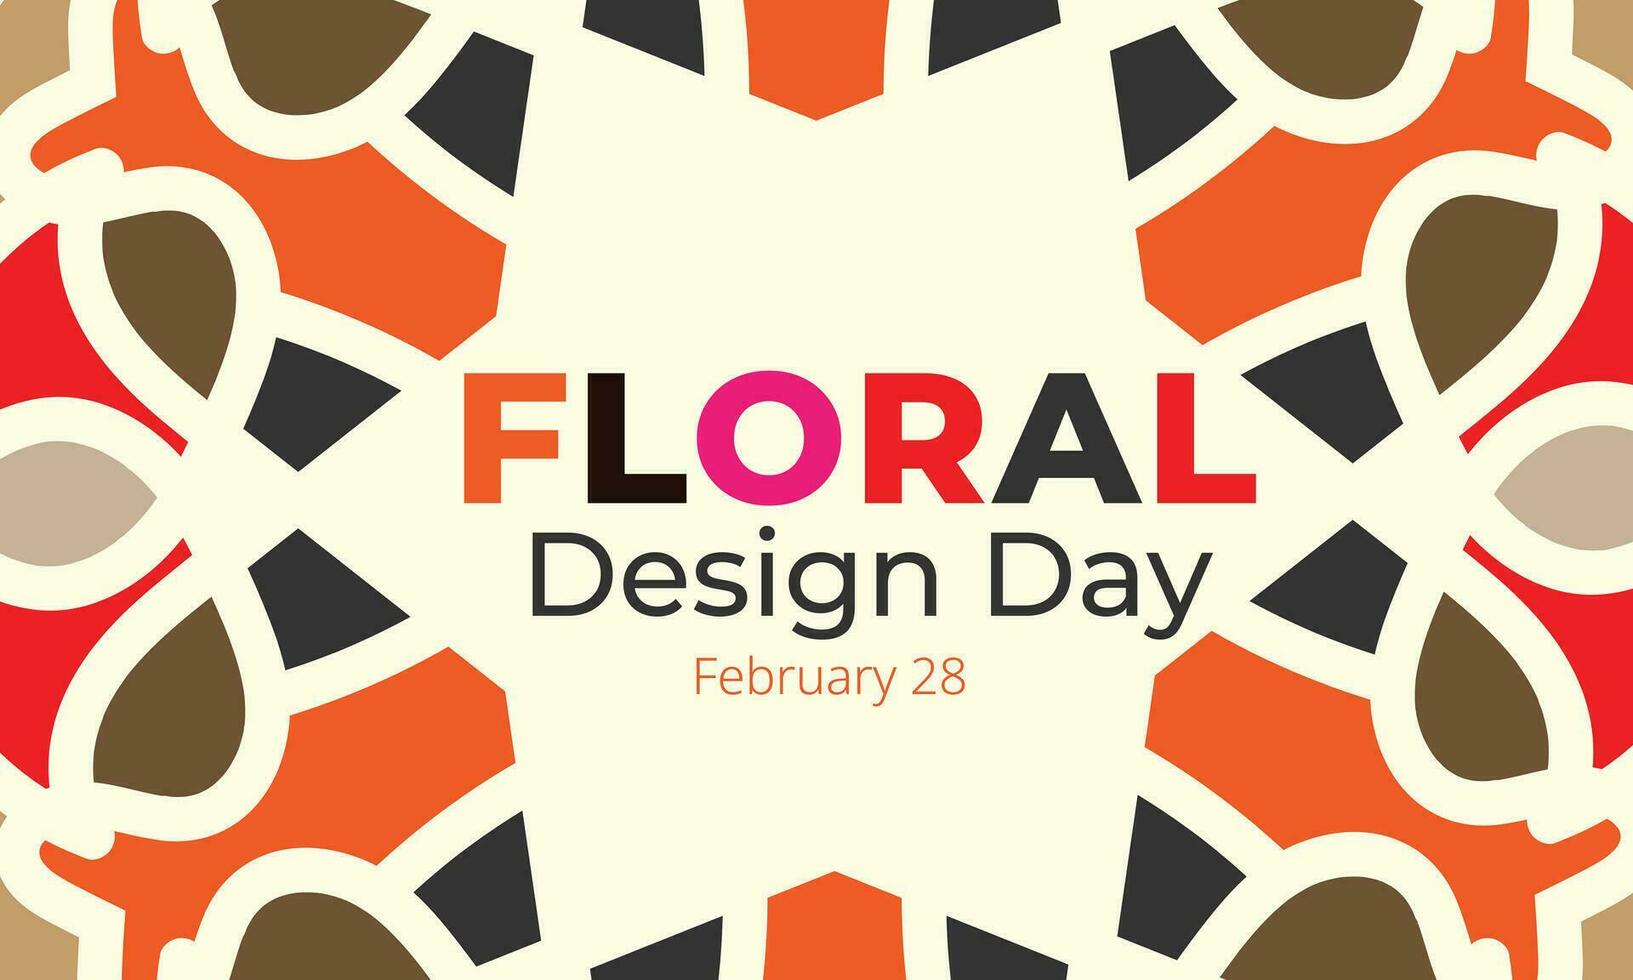 floral design day. background, banner, card, poster, template. Vector illustration.